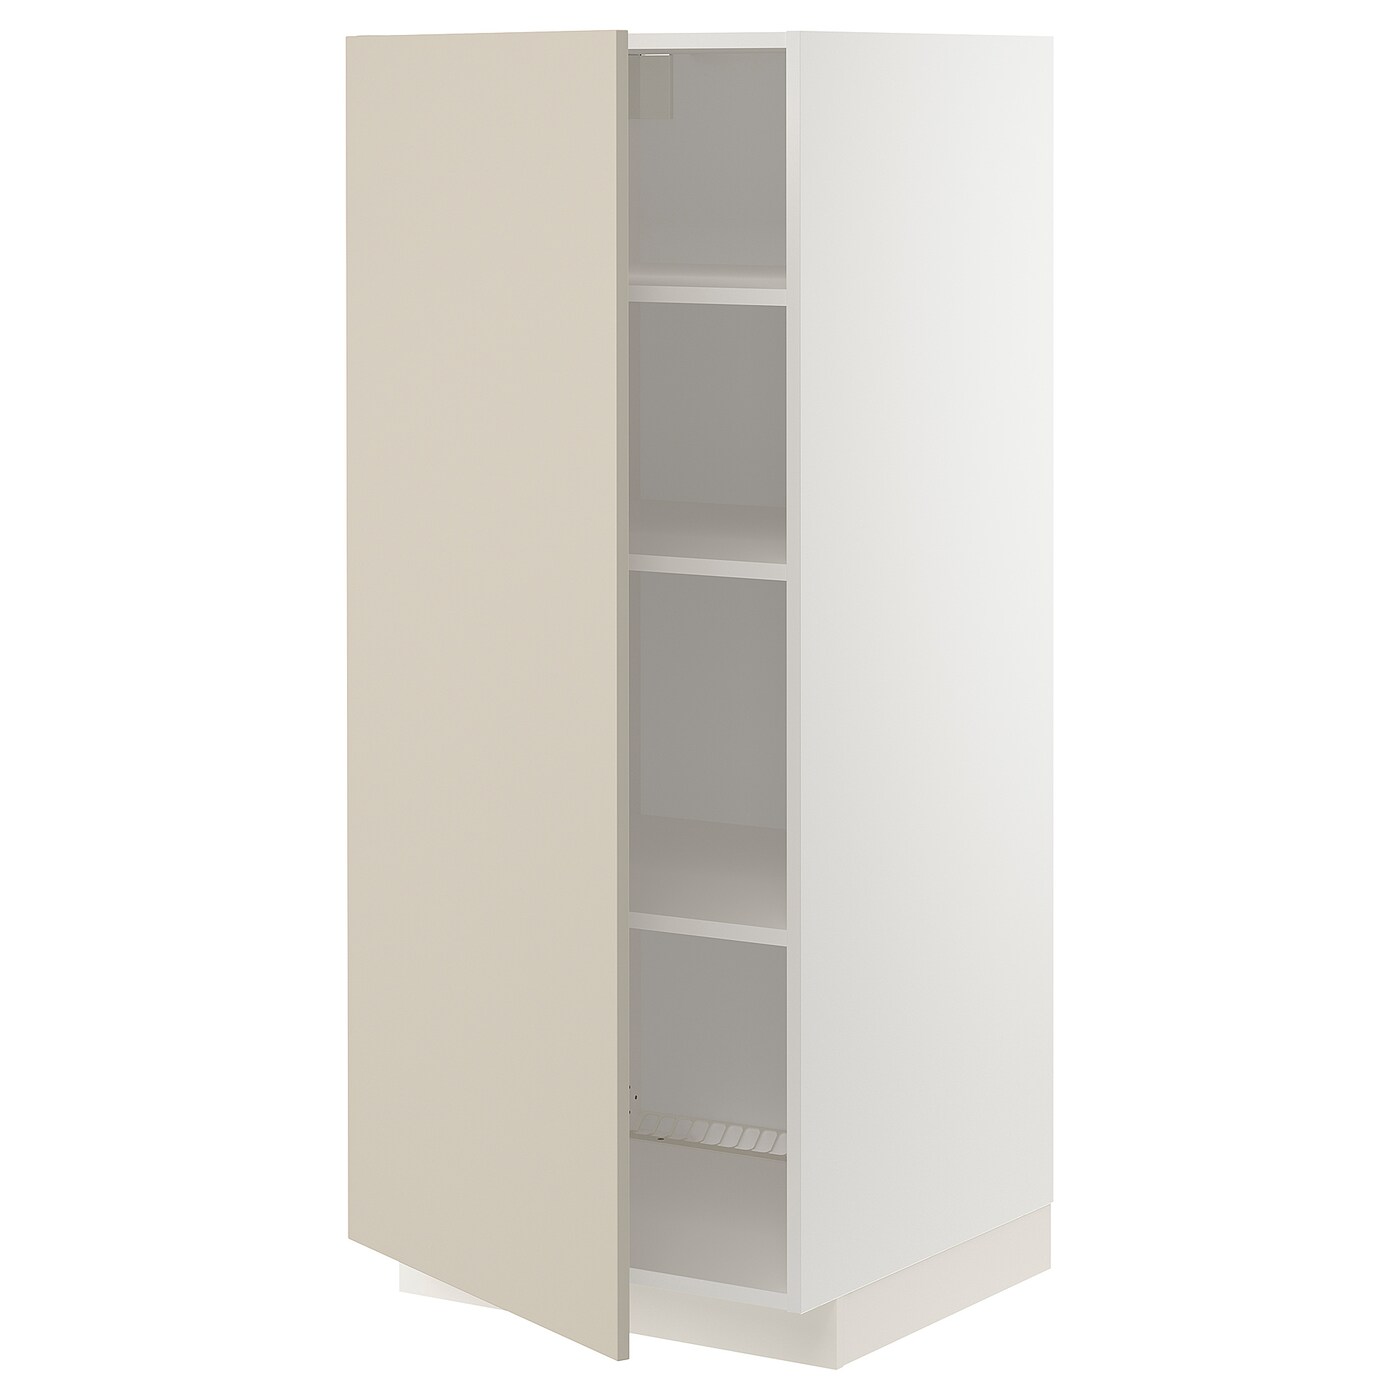 Напольный кухонный шкаф с полками - IKEA METOD/МЕТОД ИКЕА, 140х60х60 см, белый/бежевый